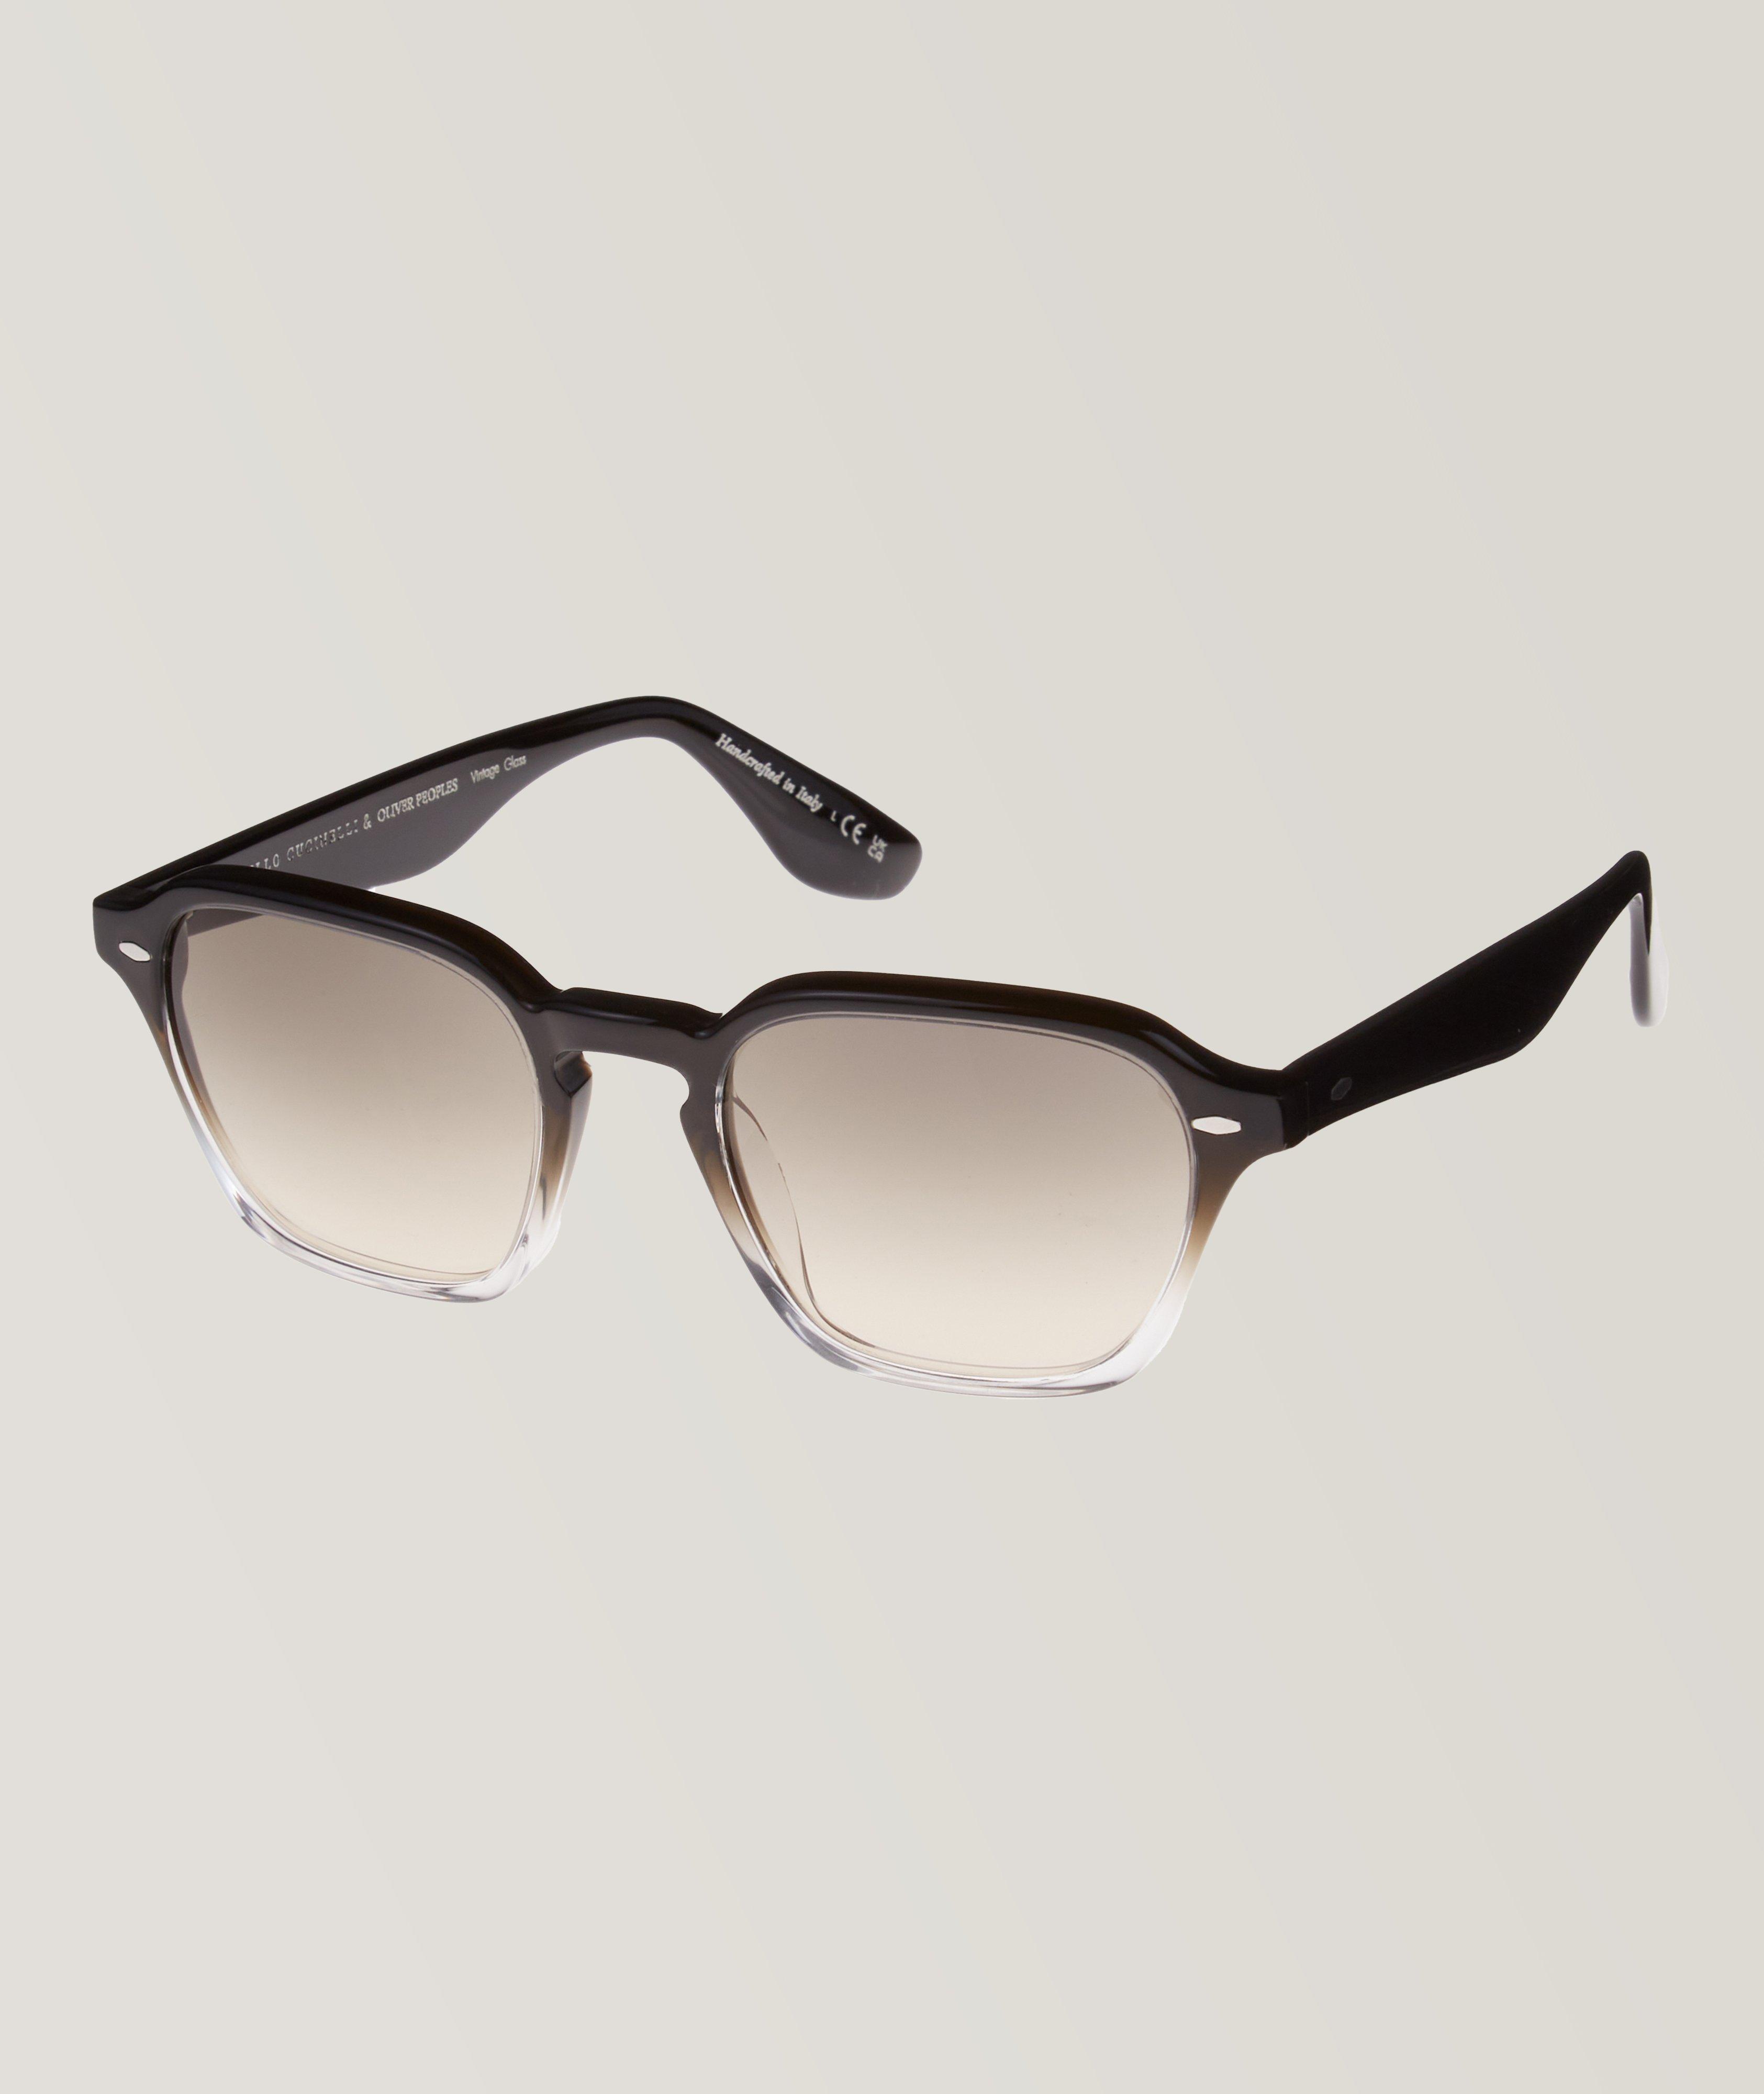 Griffo Square Frame Sunglasses image 0